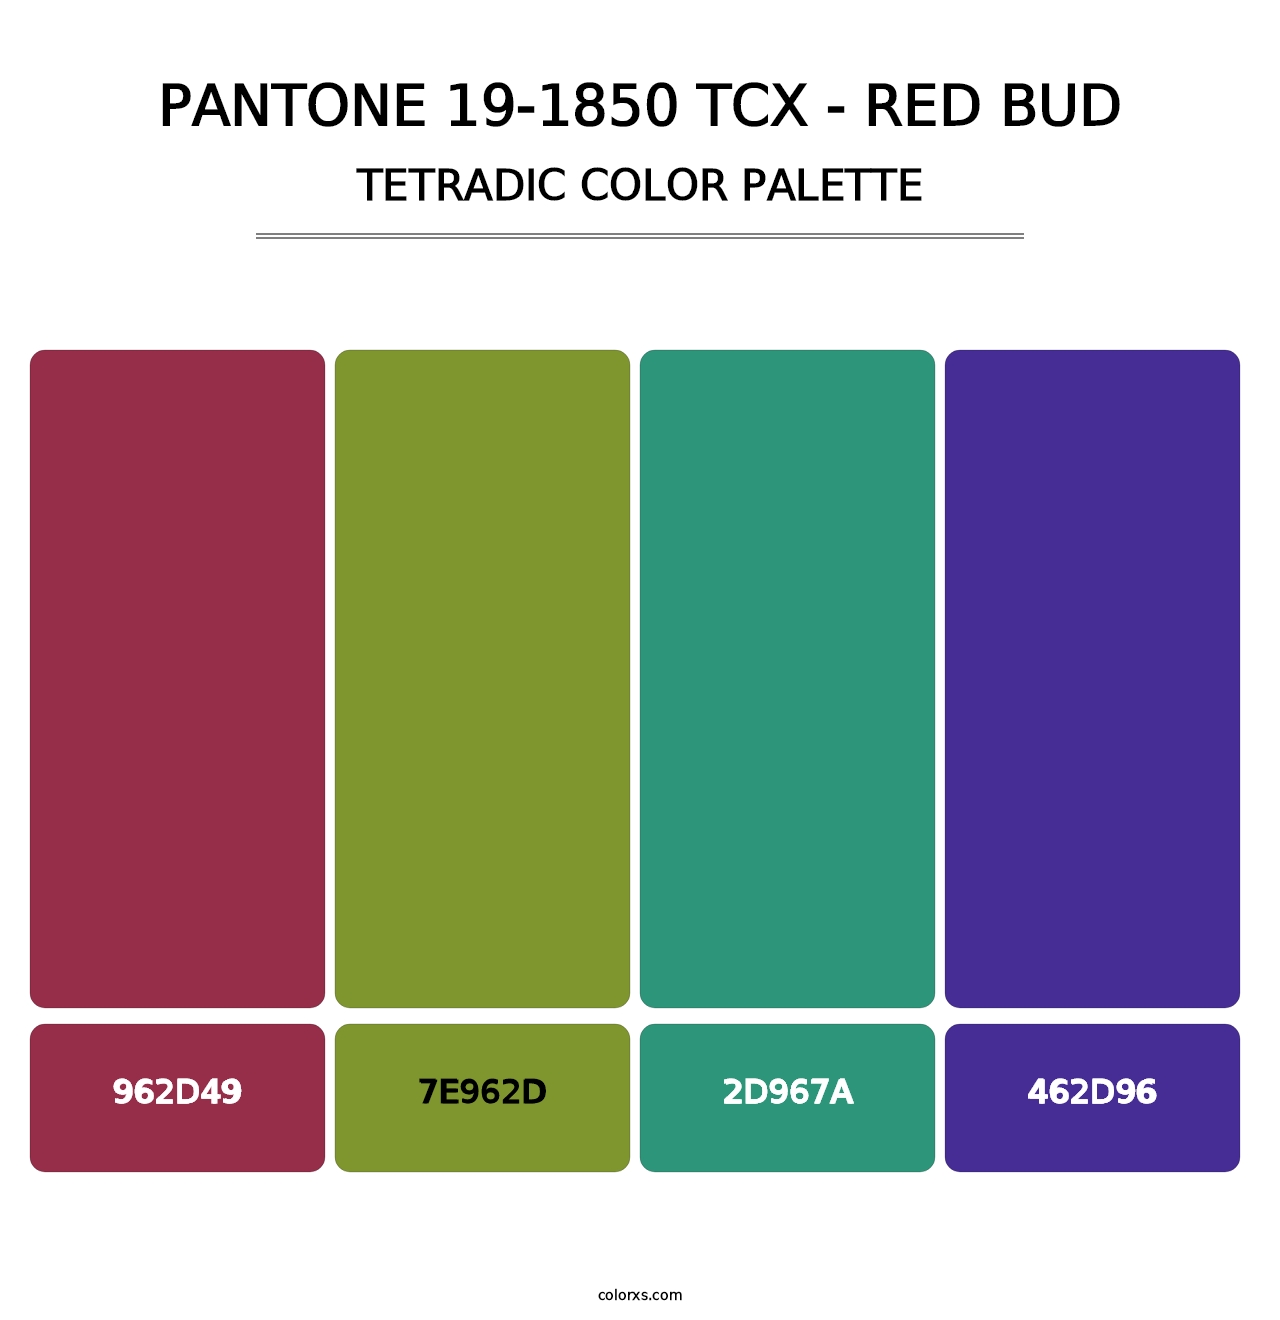 PANTONE 19-1850 TCX - Red Bud - Tetradic Color Palette